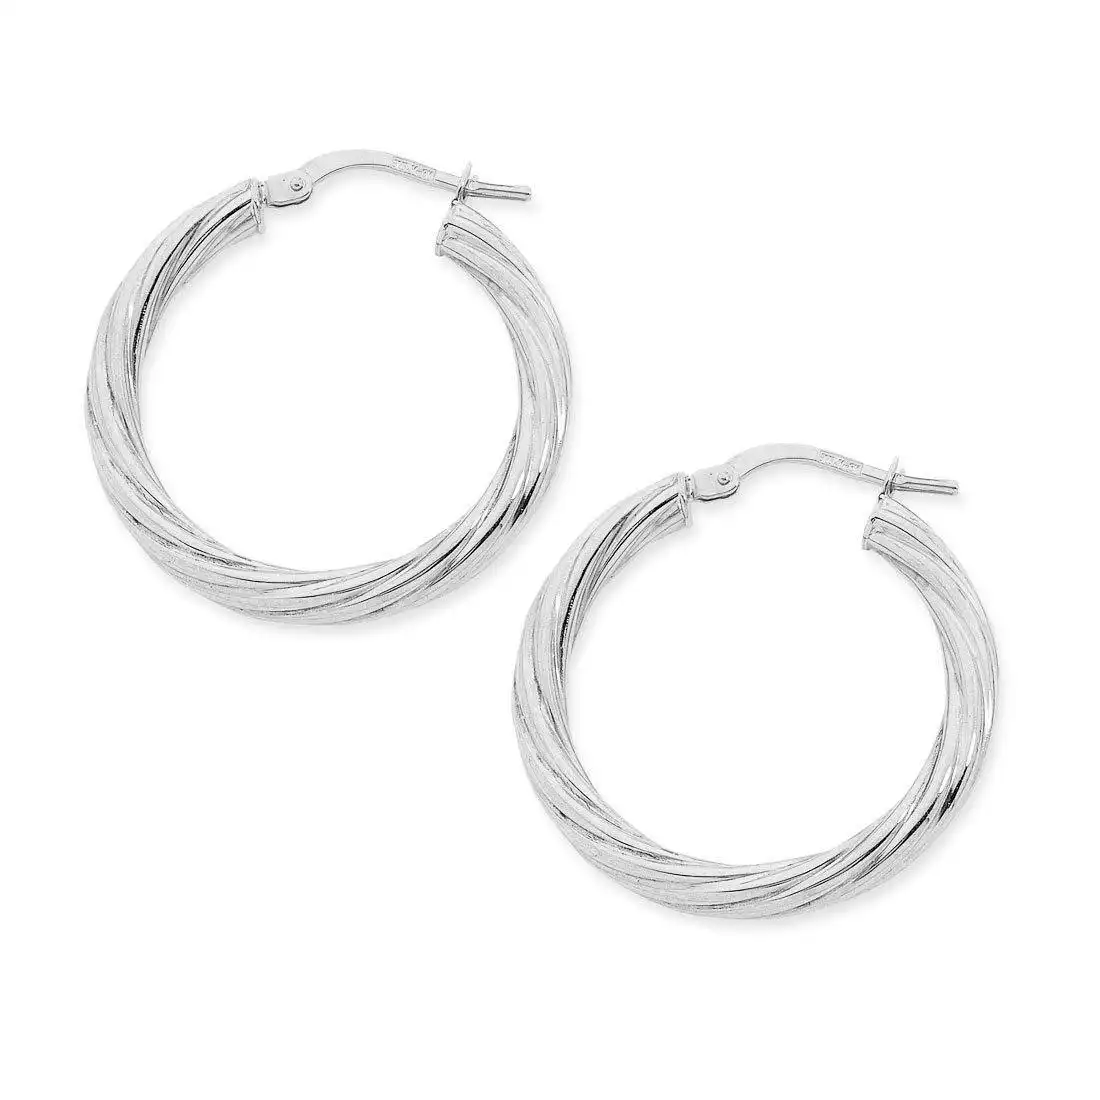 9ct White Gold Silver Infused Twist Hoop Earrings 2mm x 20mm